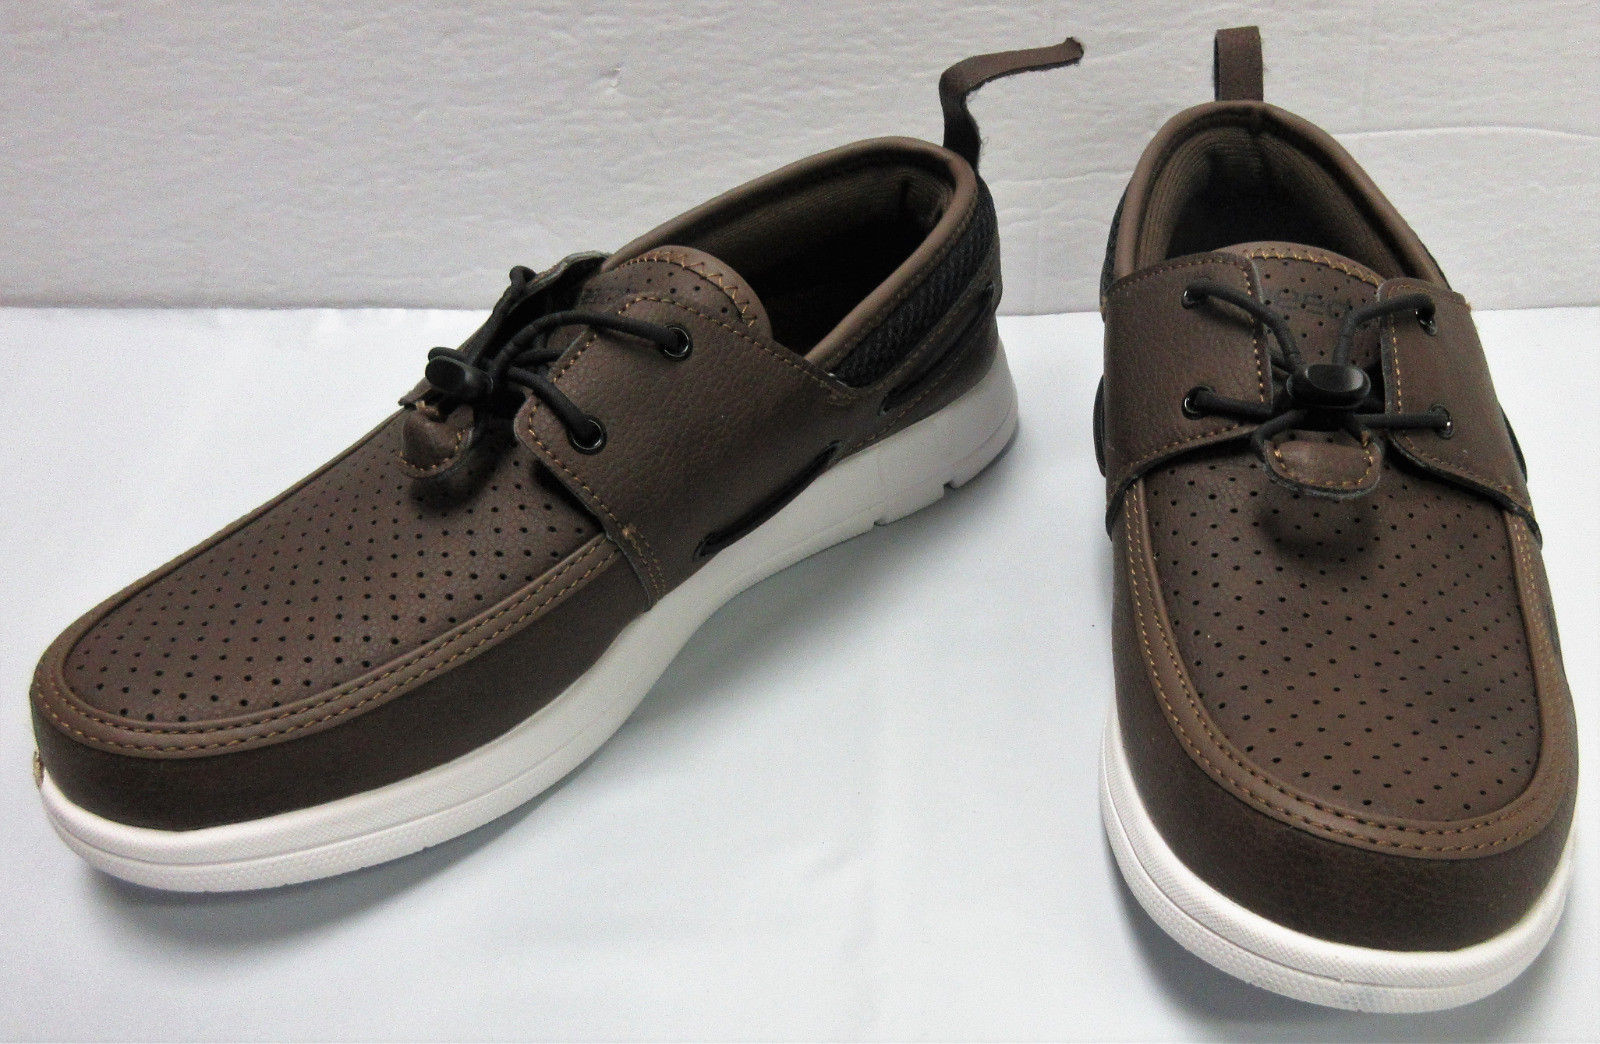 Speedo Men's Water Port Boat Dock Shoes - Size 8 - Brown - Athletic